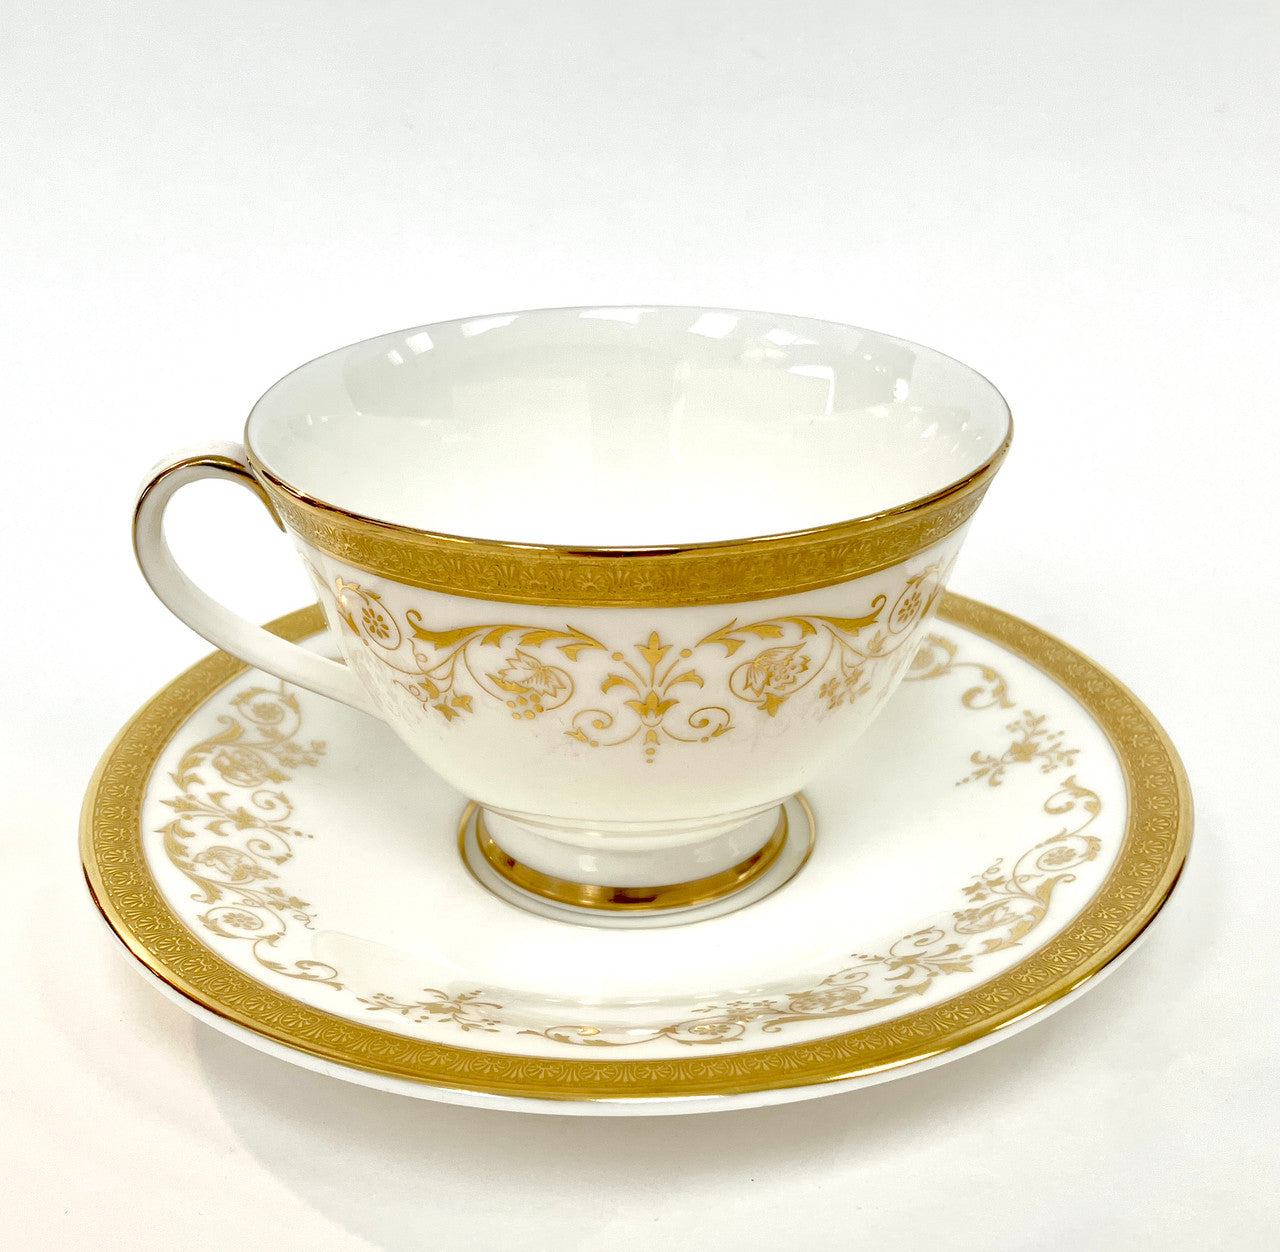 Royal Doulton, Belmont, H. 4991,  SET, Tea Cup, Teacup, Cup and Saucer, Fine Bone China, Vintage, England, White, Gold